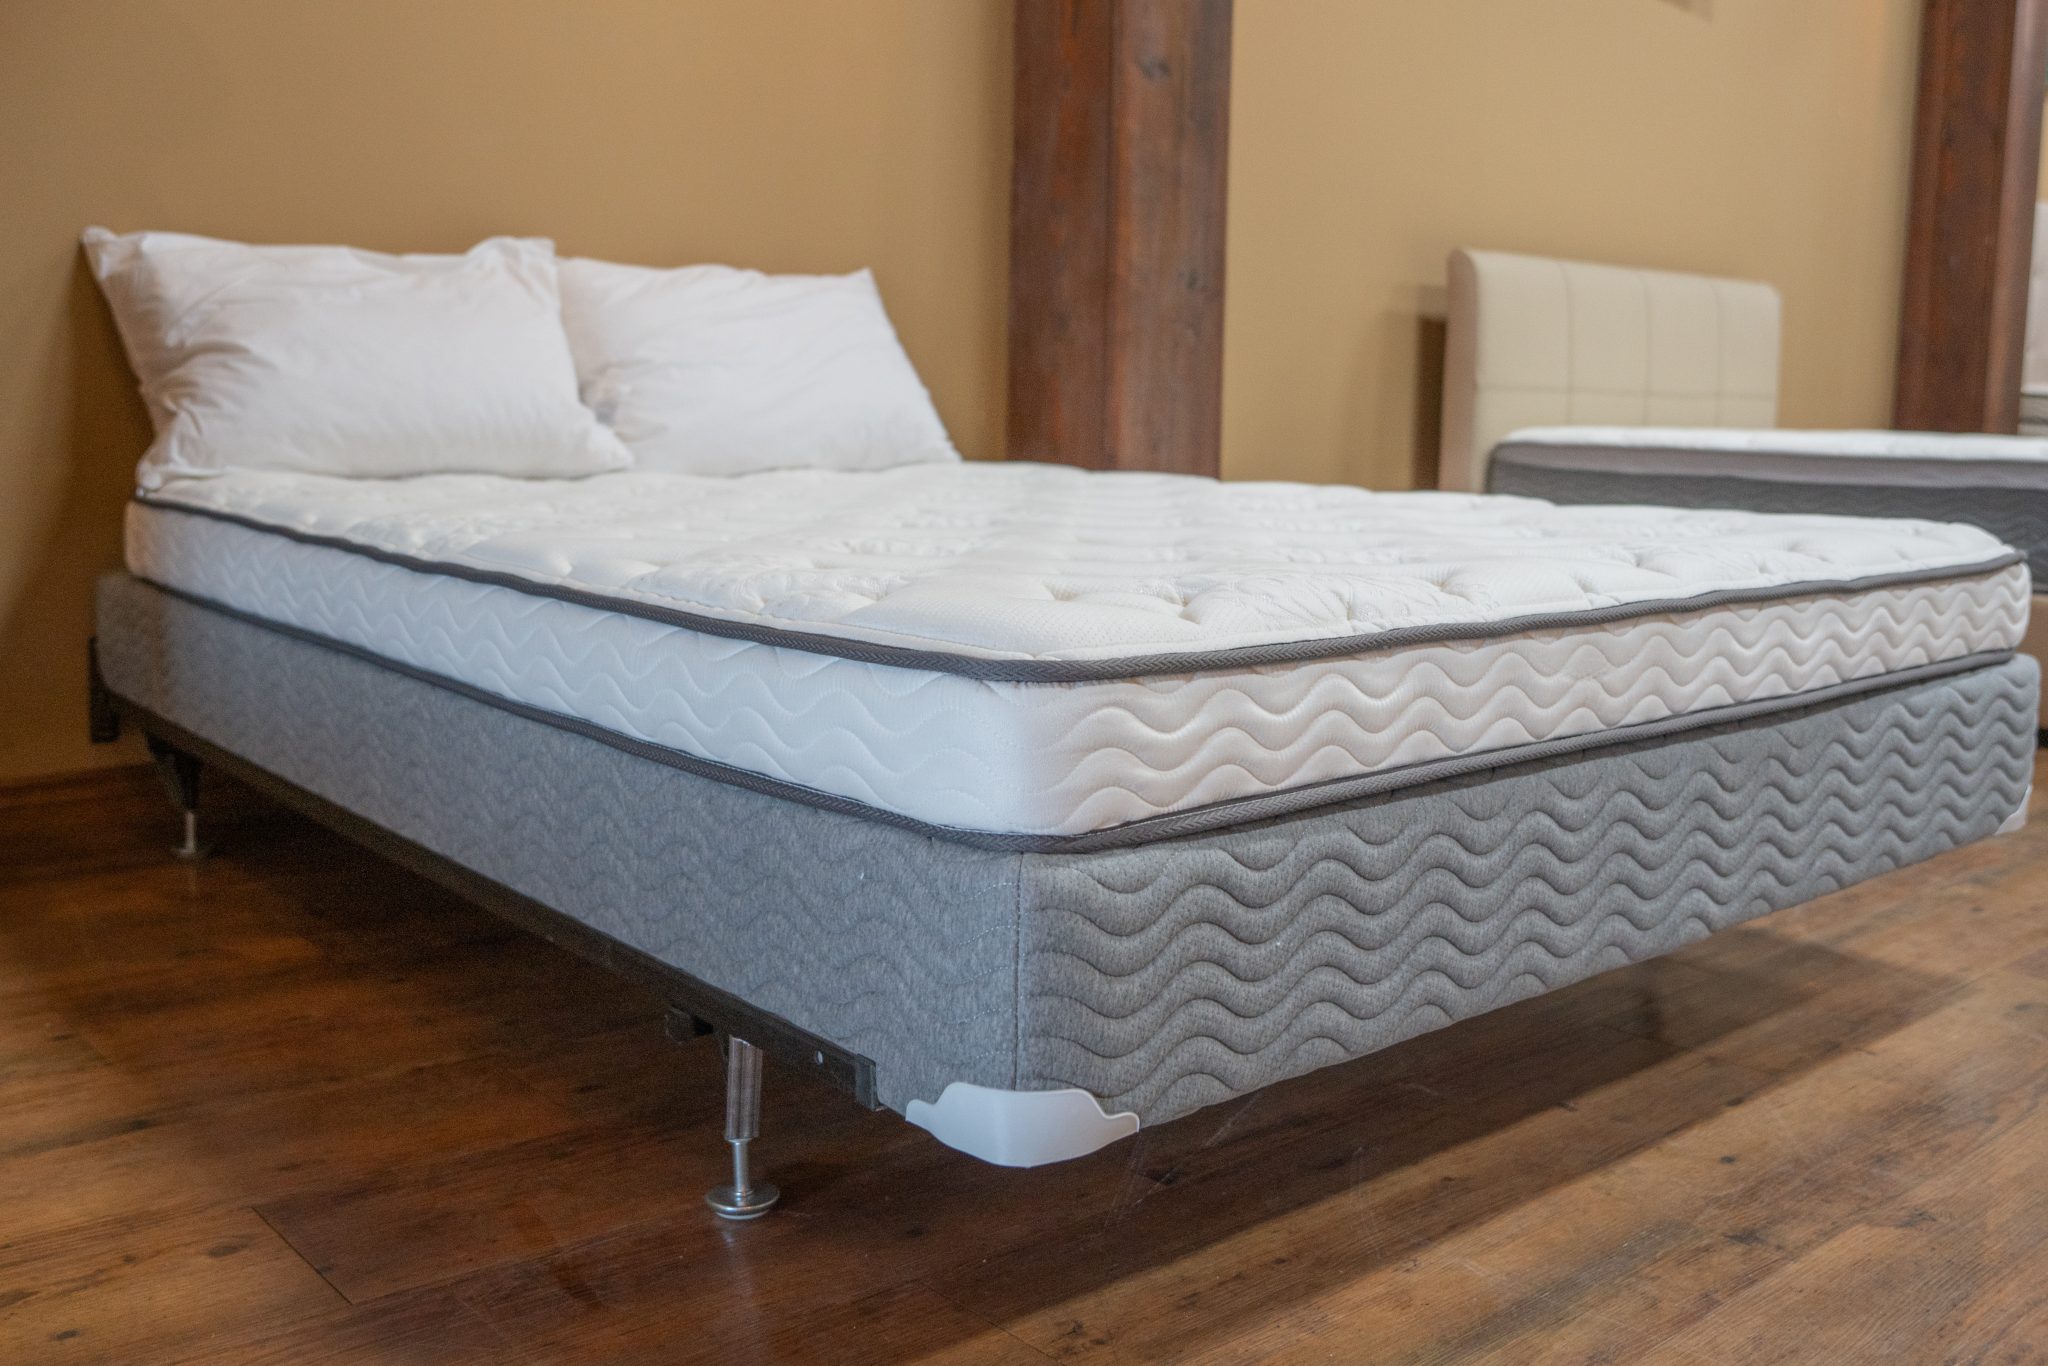 replacement mattress for sleepsafe bed